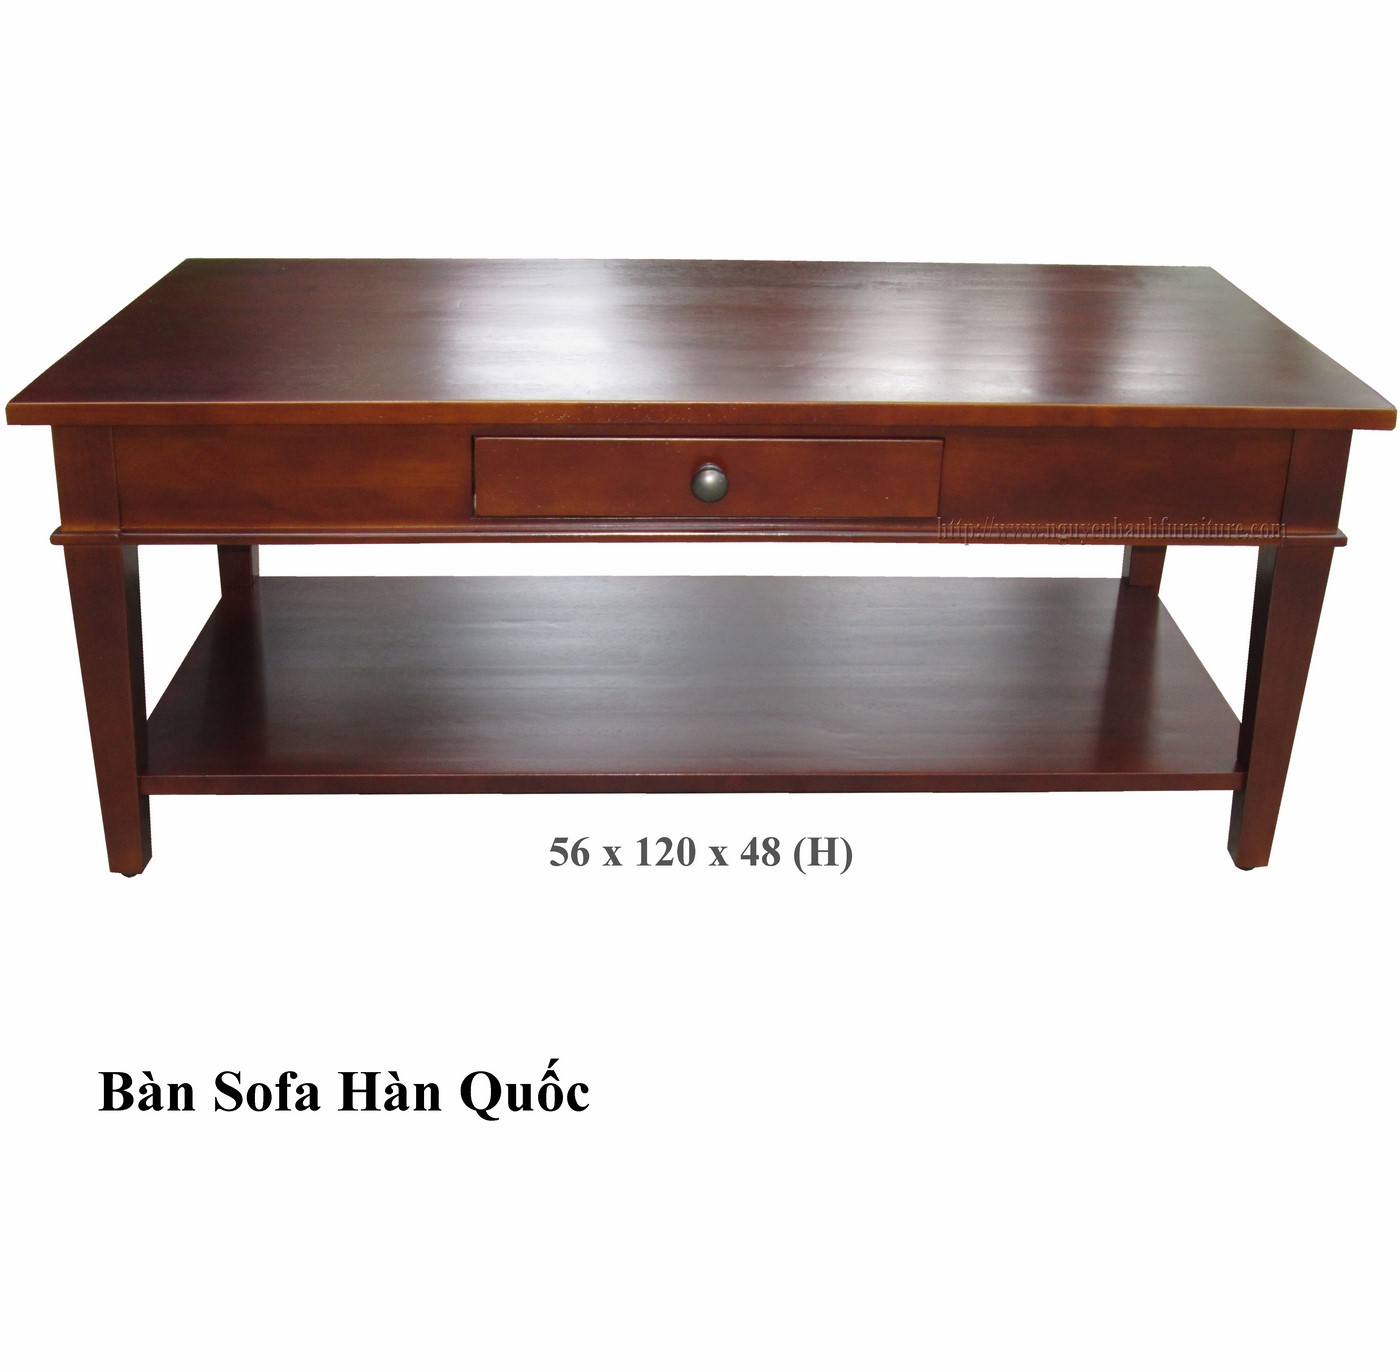 Name product: Sofa table Korea - Brown Color - Dimensions: 56 x 120 x 48 - Description: Wood natural rubber